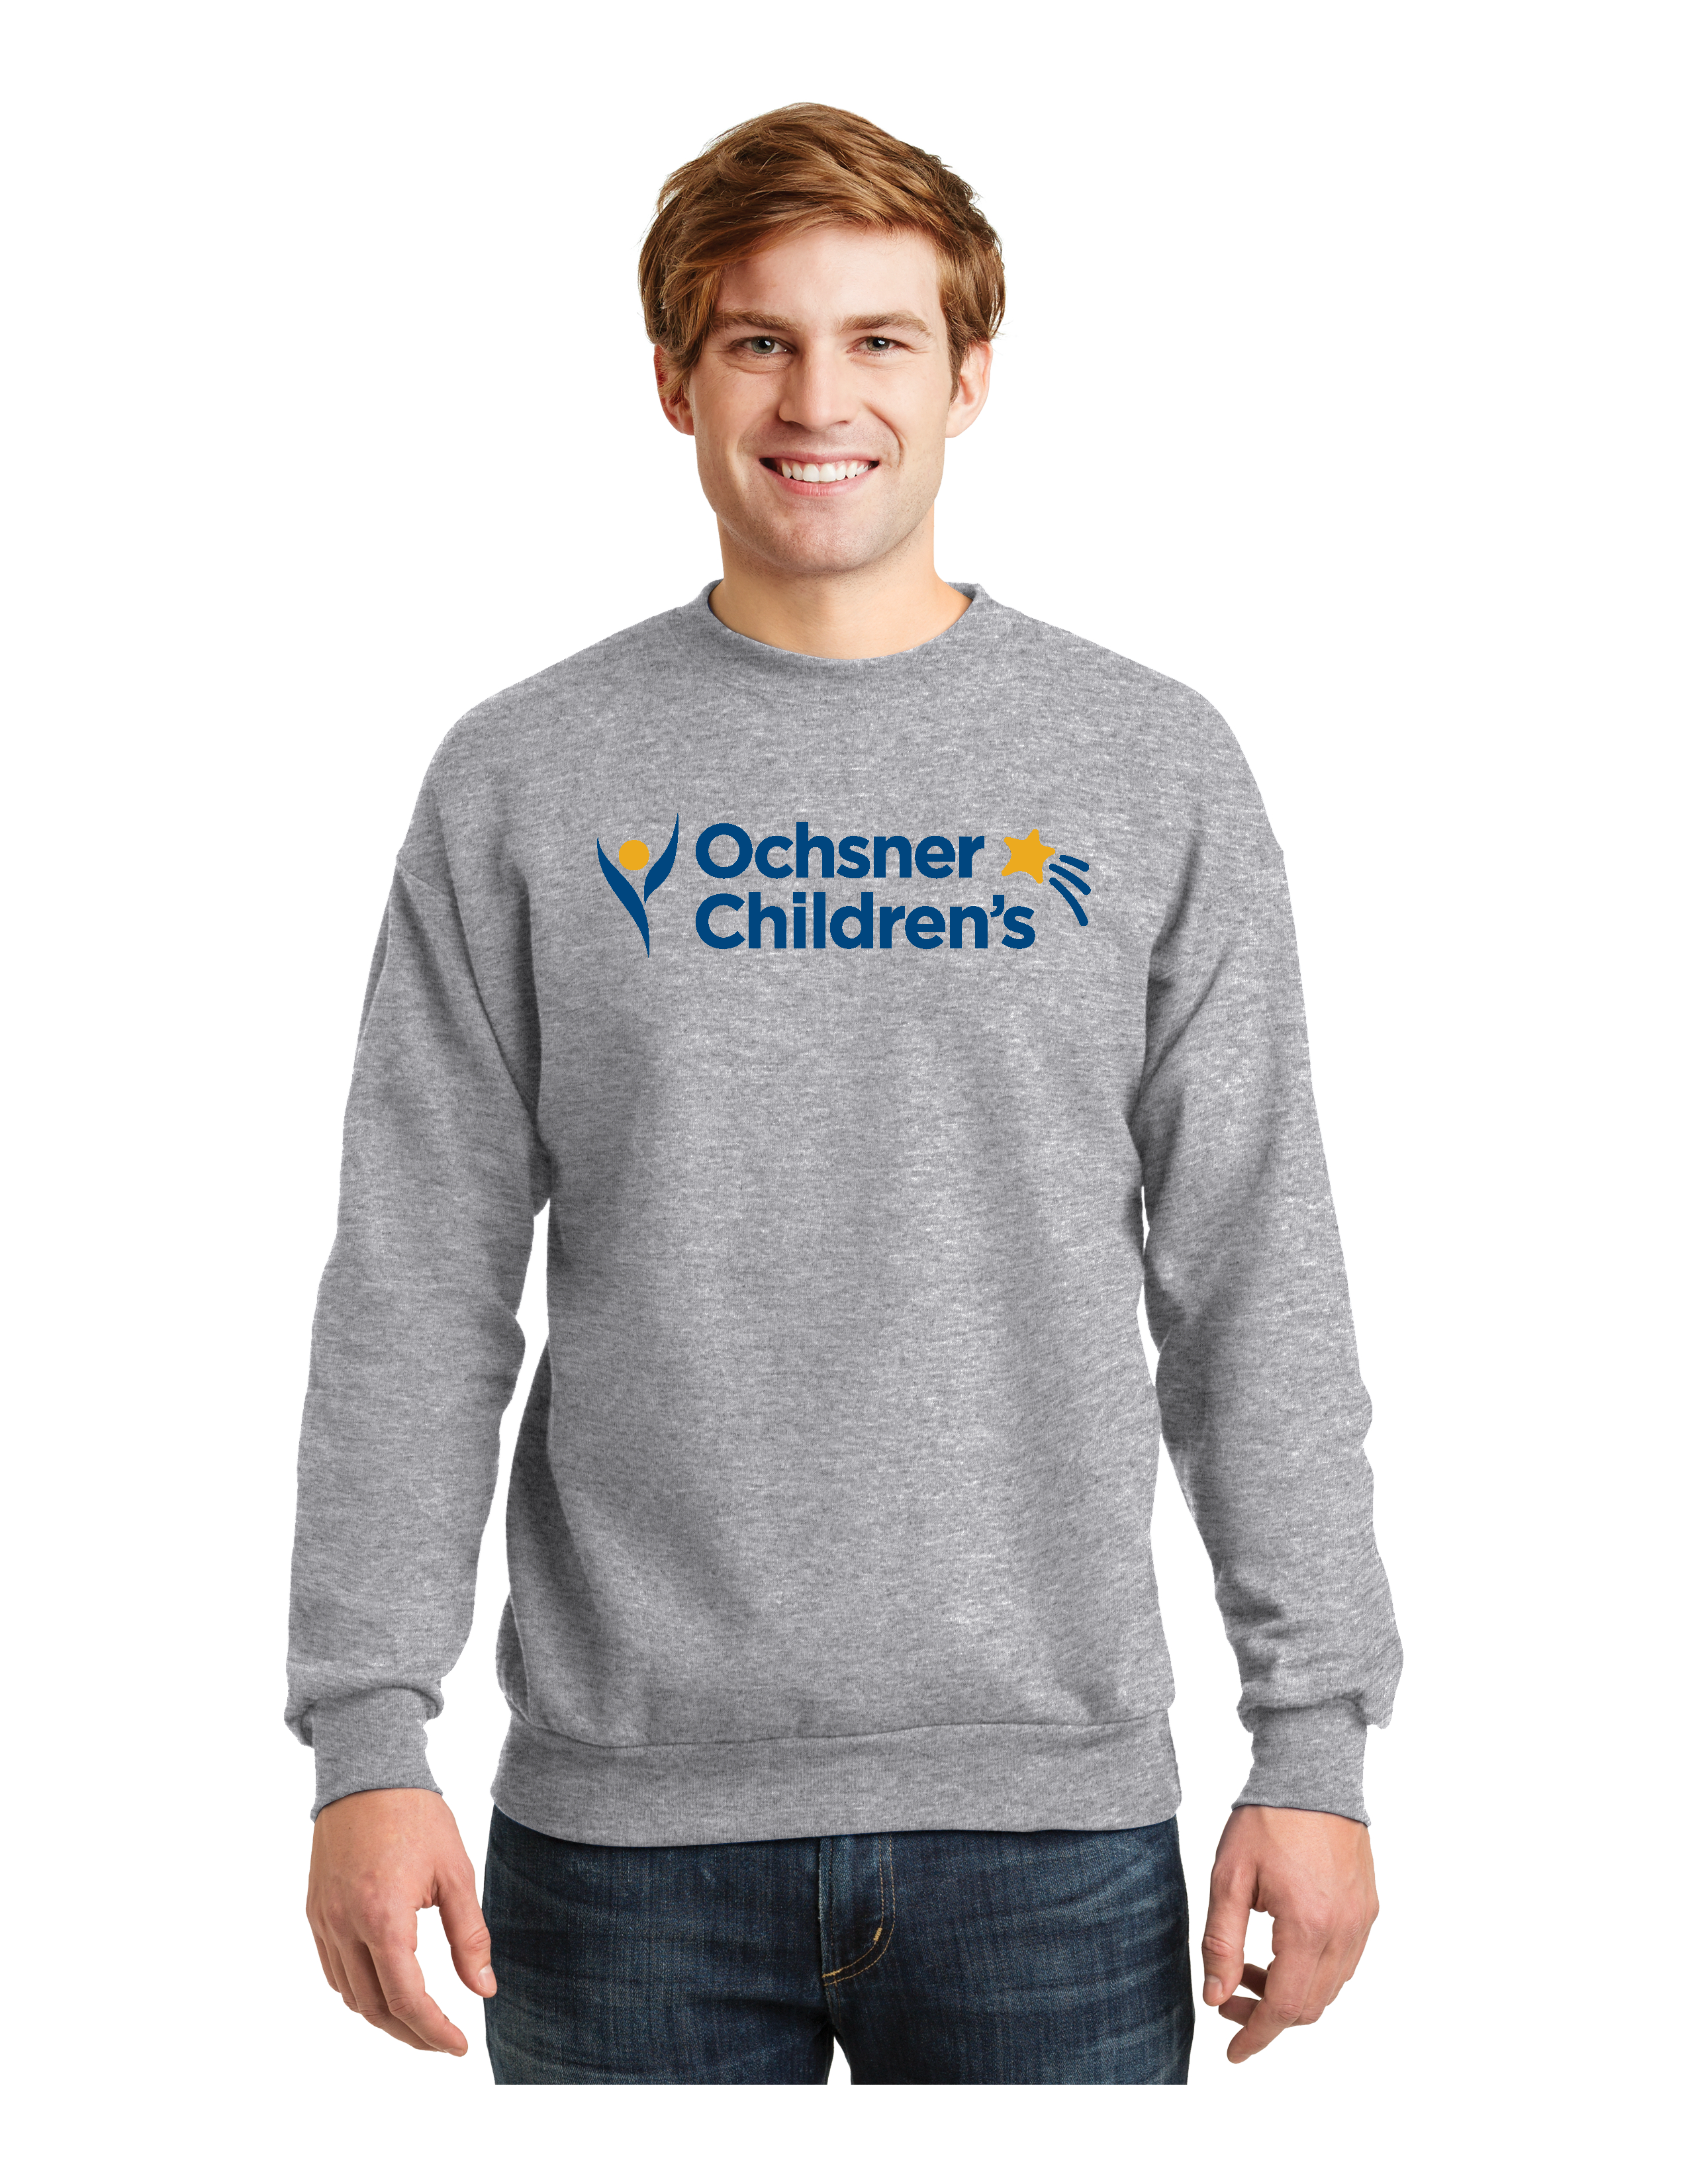 Ochsner Children's Screen-Print Sweatshirt, , large image number 2